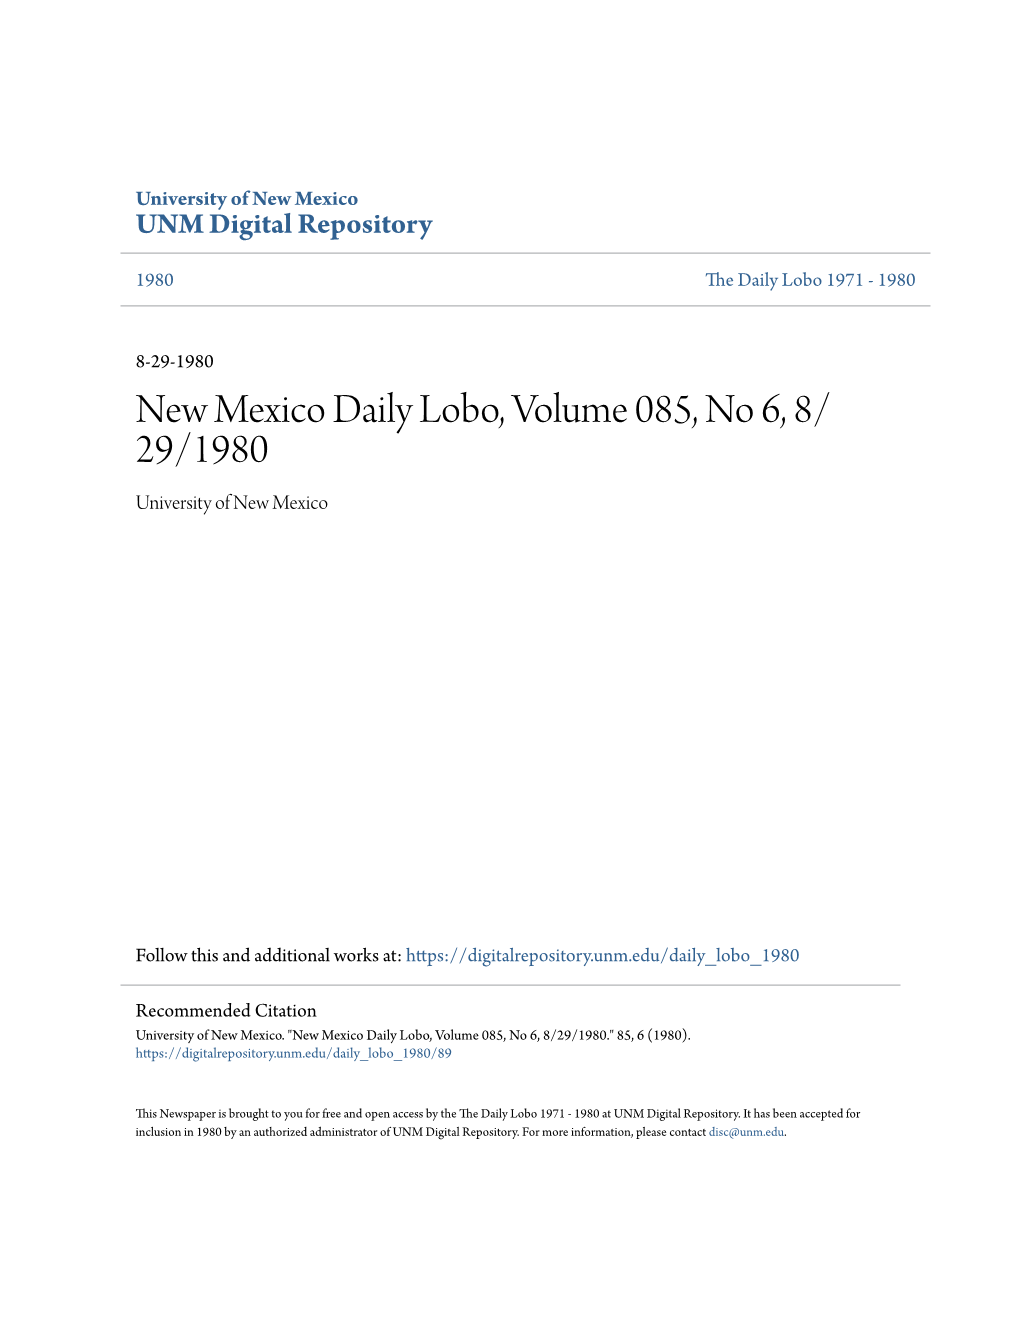 New Mexico Daily Lobo, Volume 085, No 6, 8/29/1980." 85, 6 (1980)